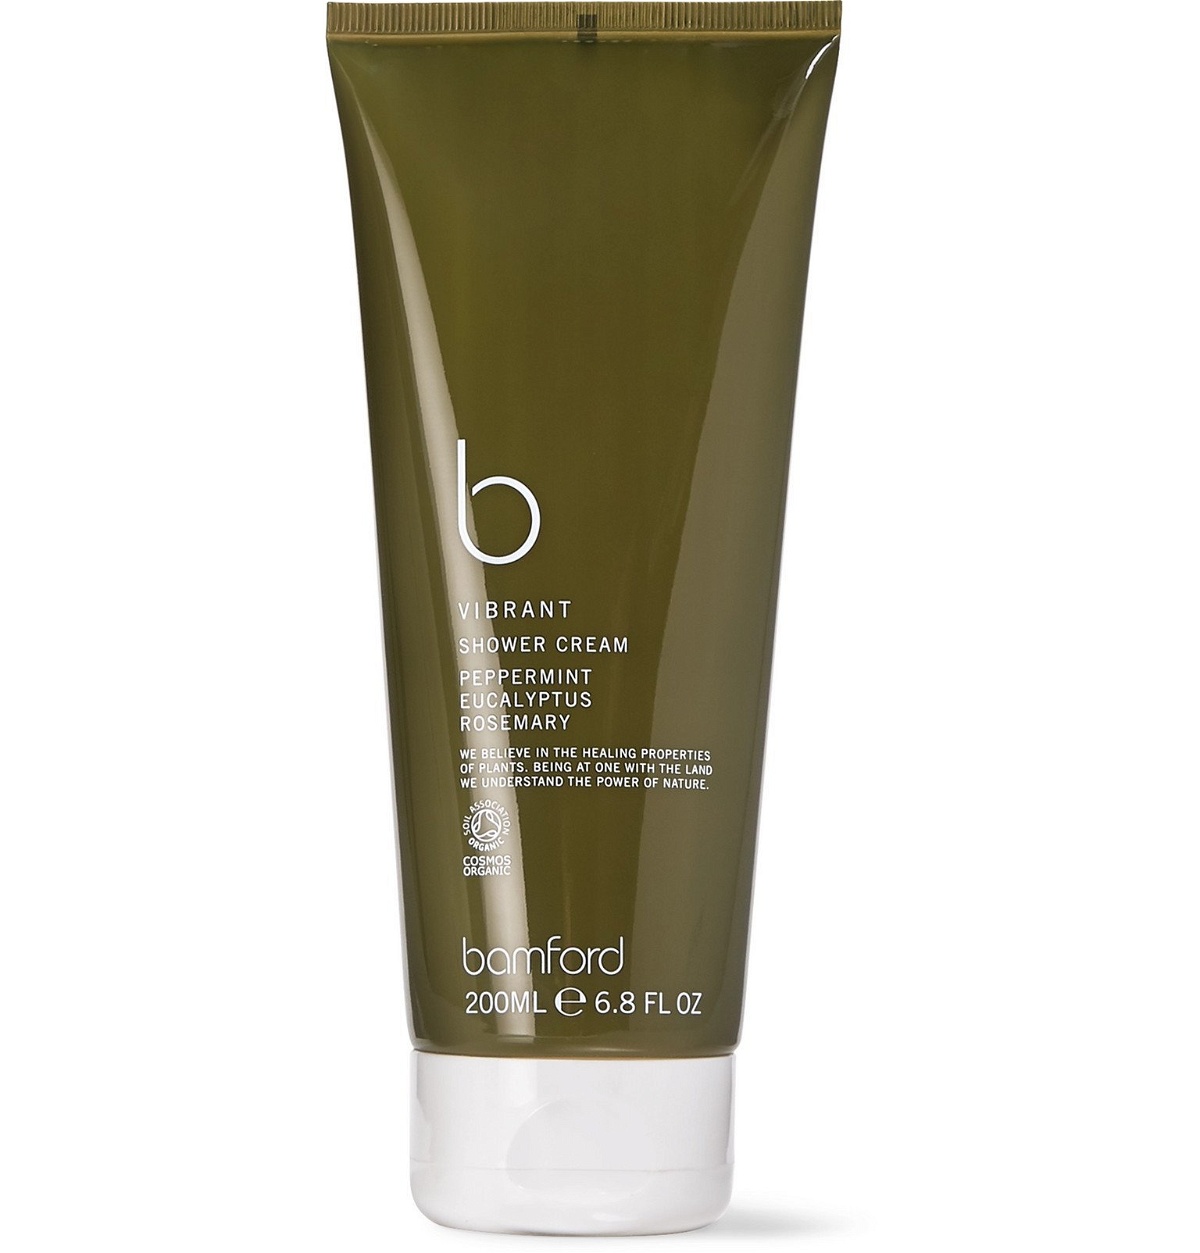 Photo: Bamford Grooming Department - B Vibrant Shower Cream, 200ml - Colorless